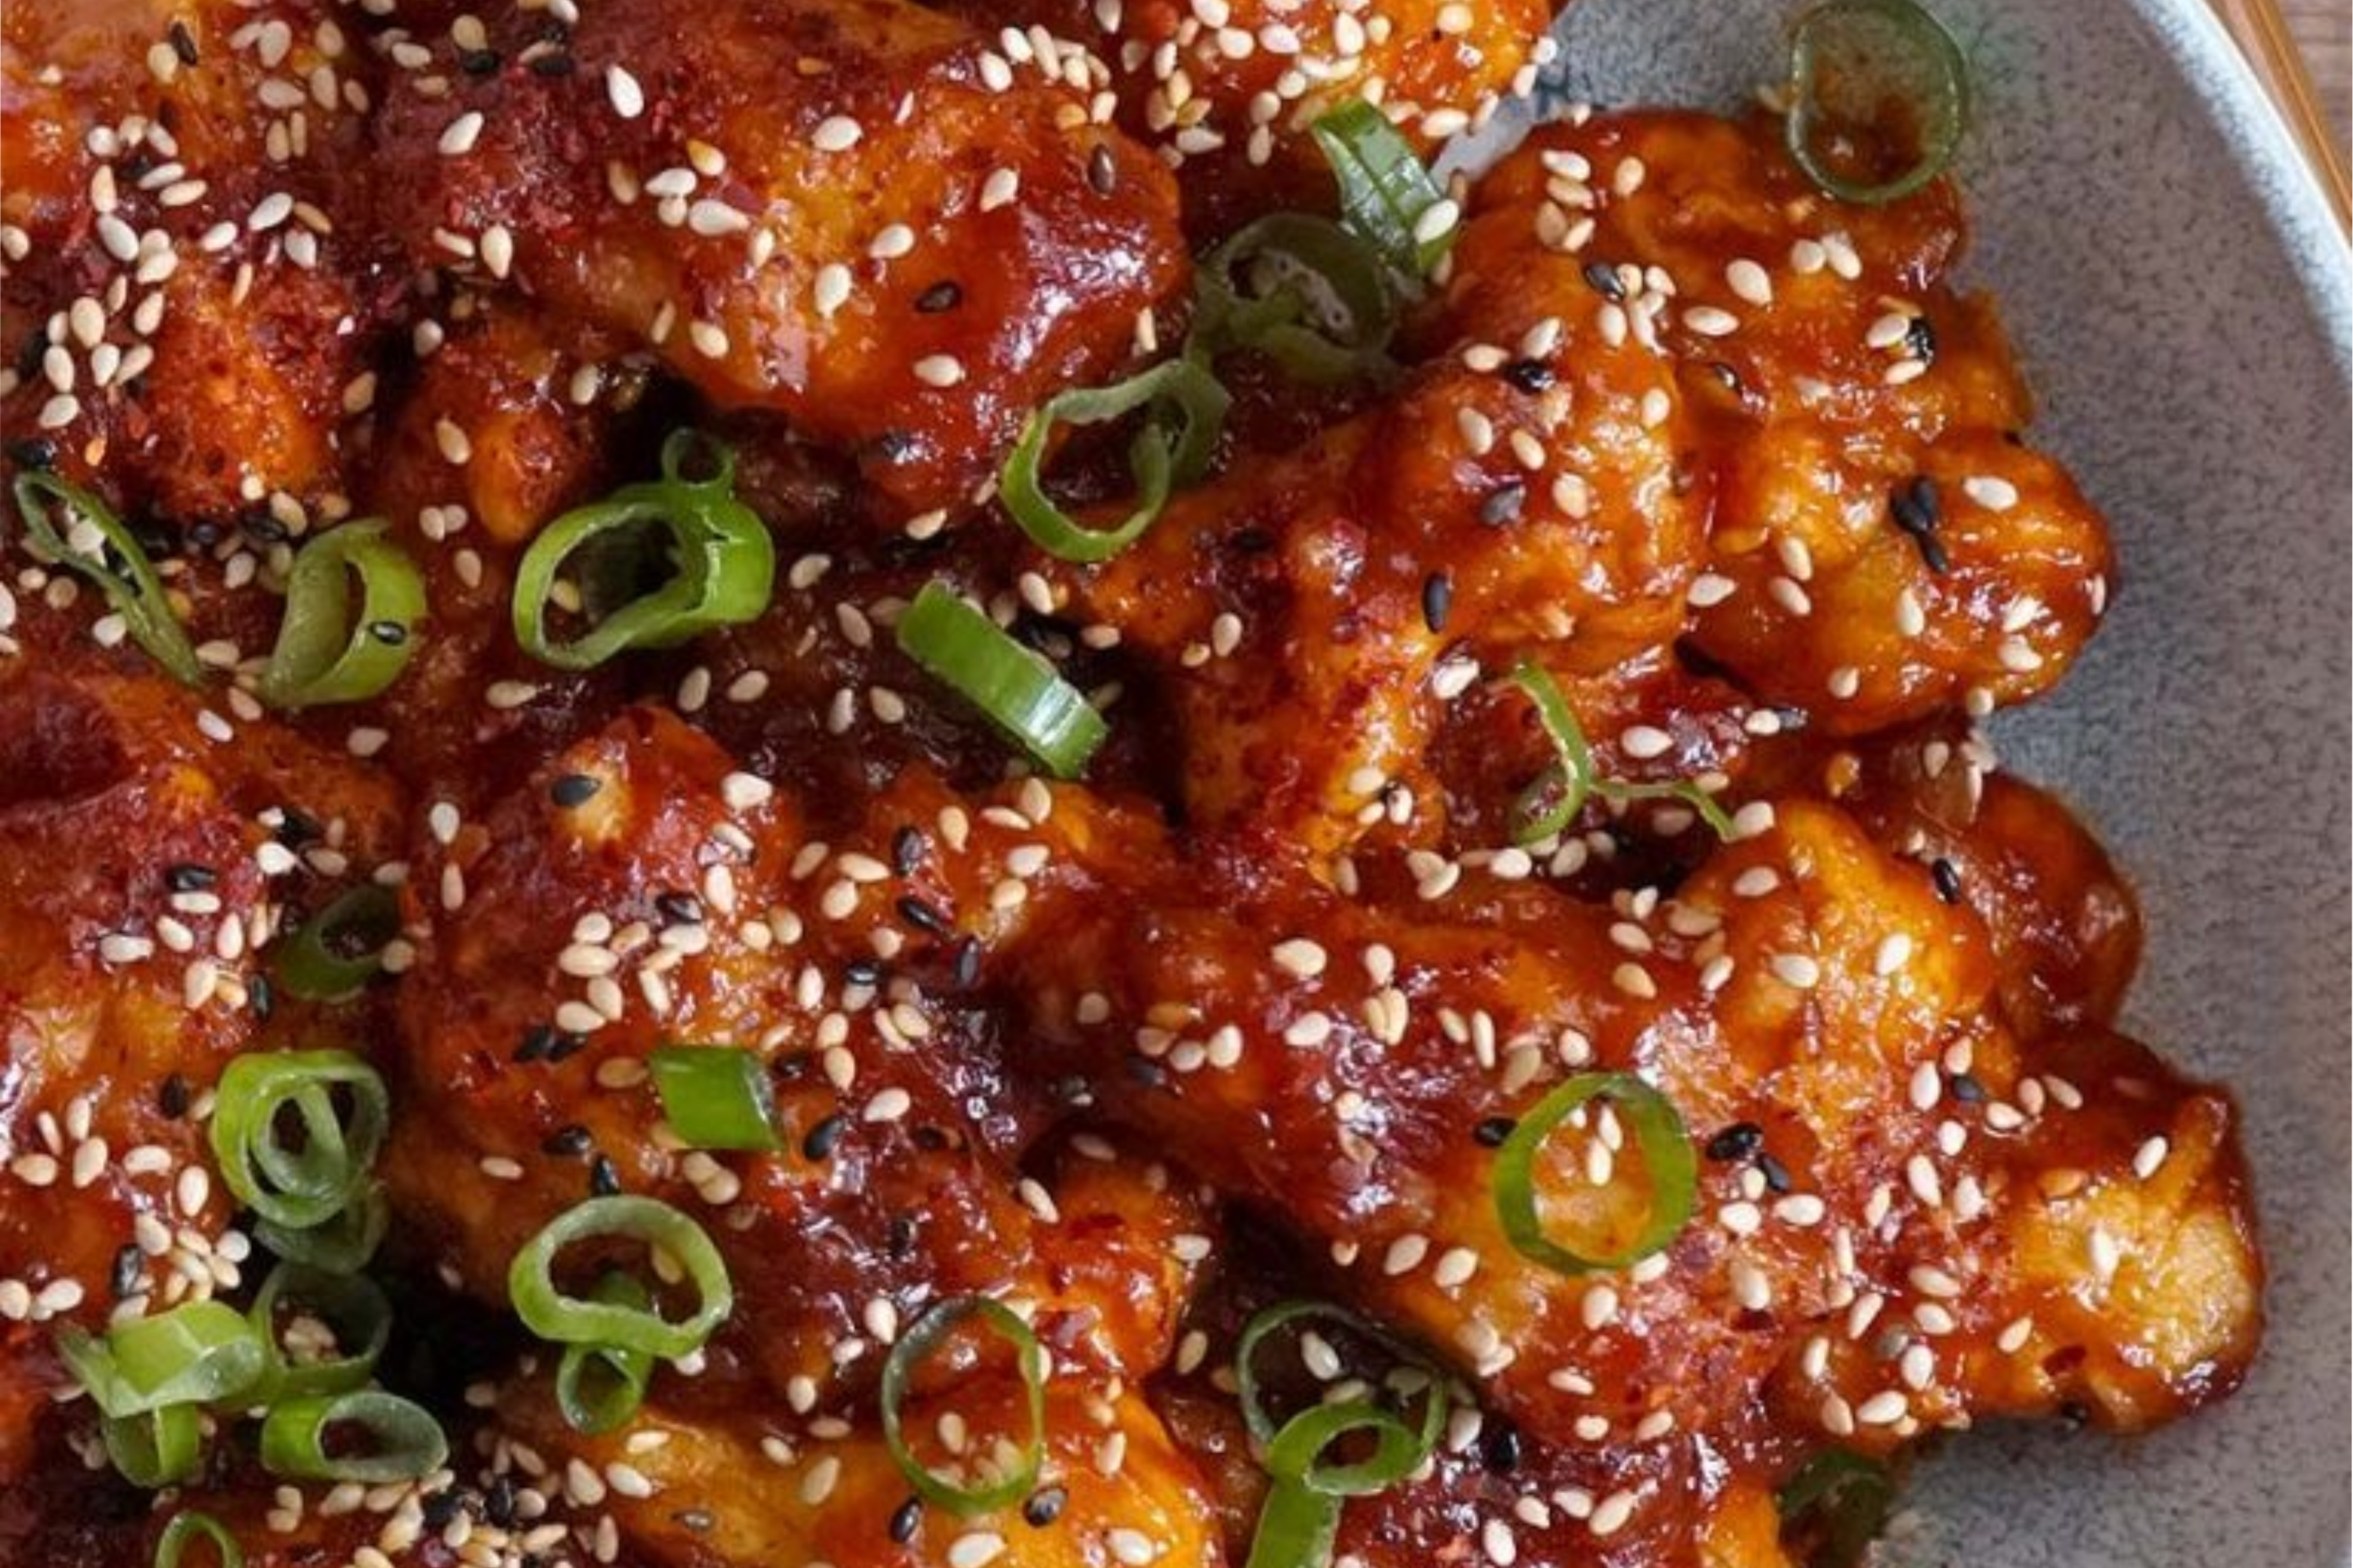 Resep Korean Spicy Chicken, Ayam Pedas Khas Korea dengan Perpaduan Rasa Manis dan Pedas yang Pasti Nagih!